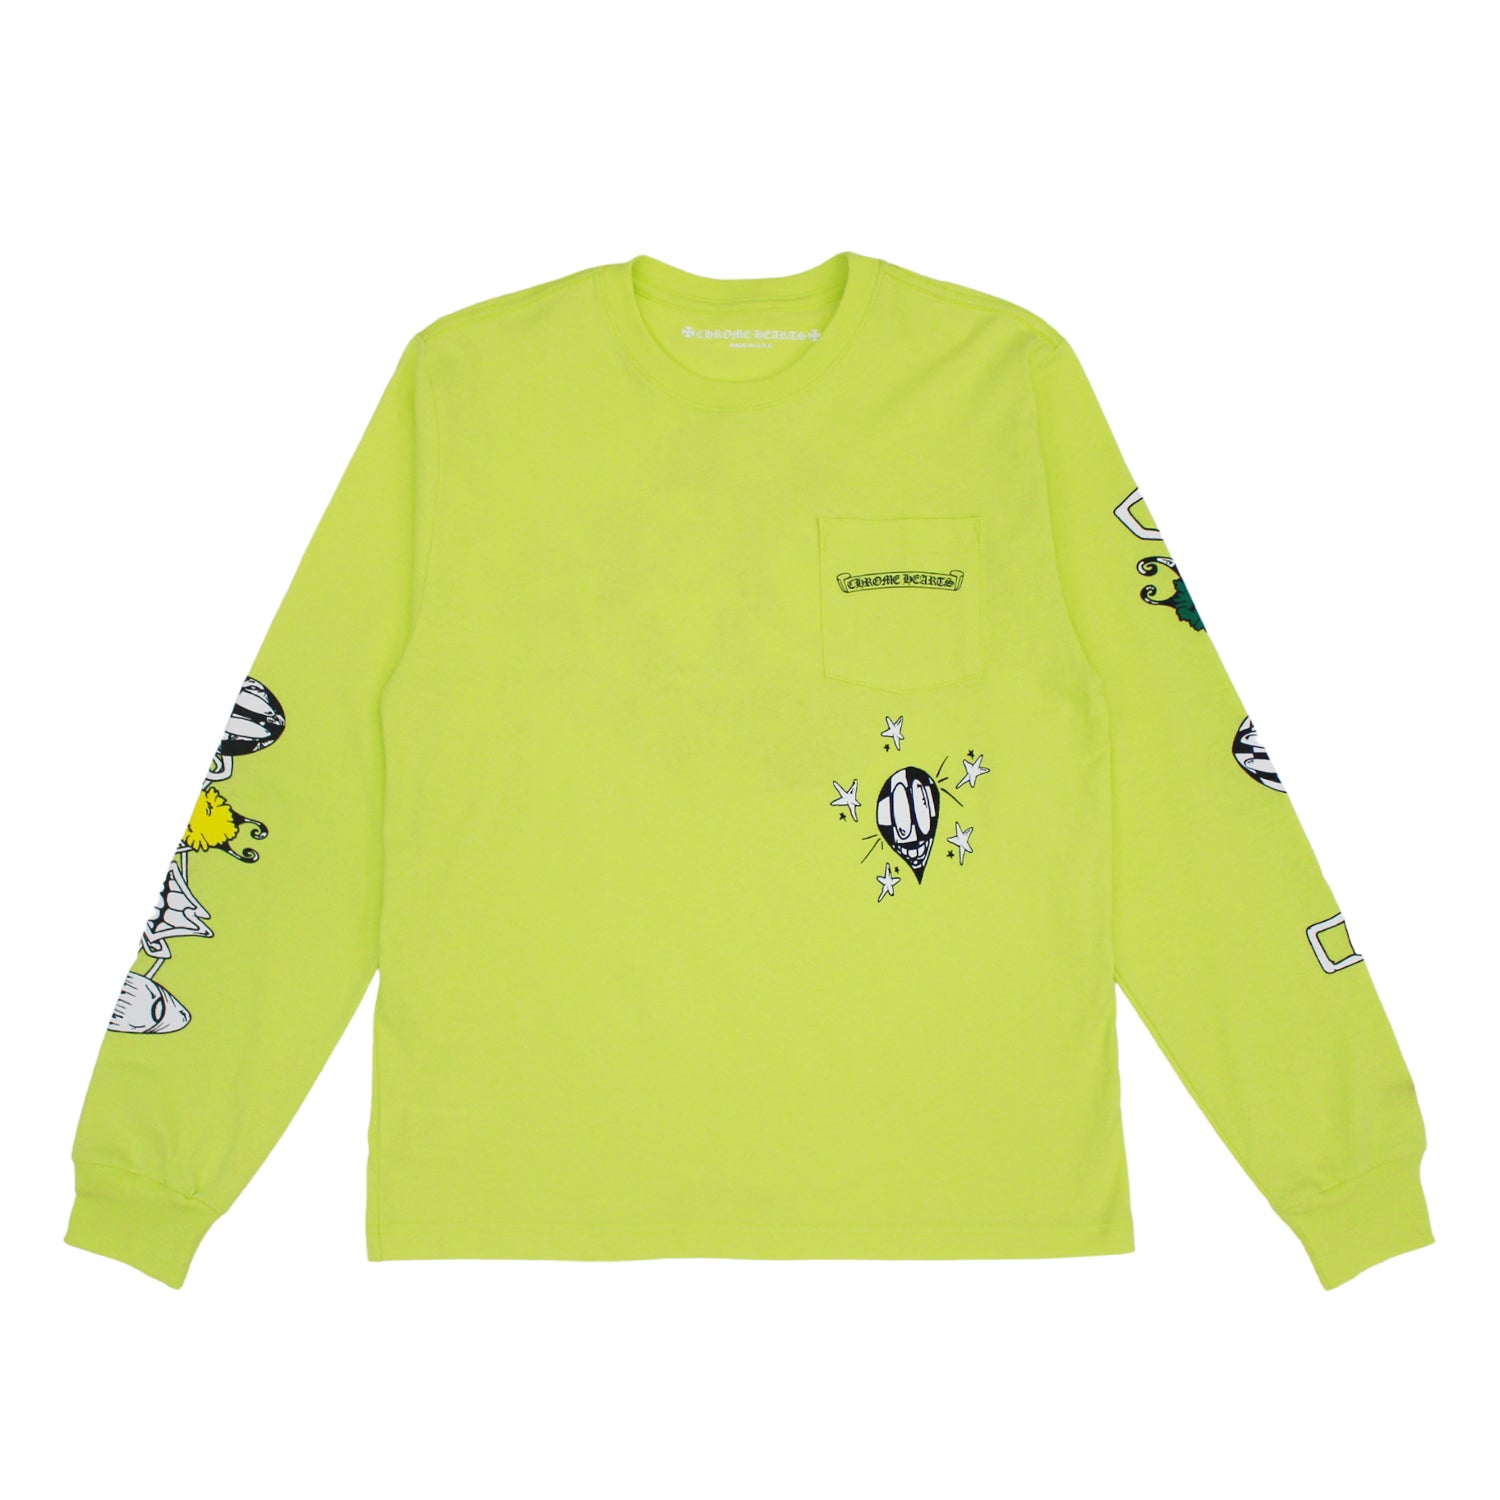 Chrome Hearts Matty Boy Link L/S T-shirt Lime Green Men's - US